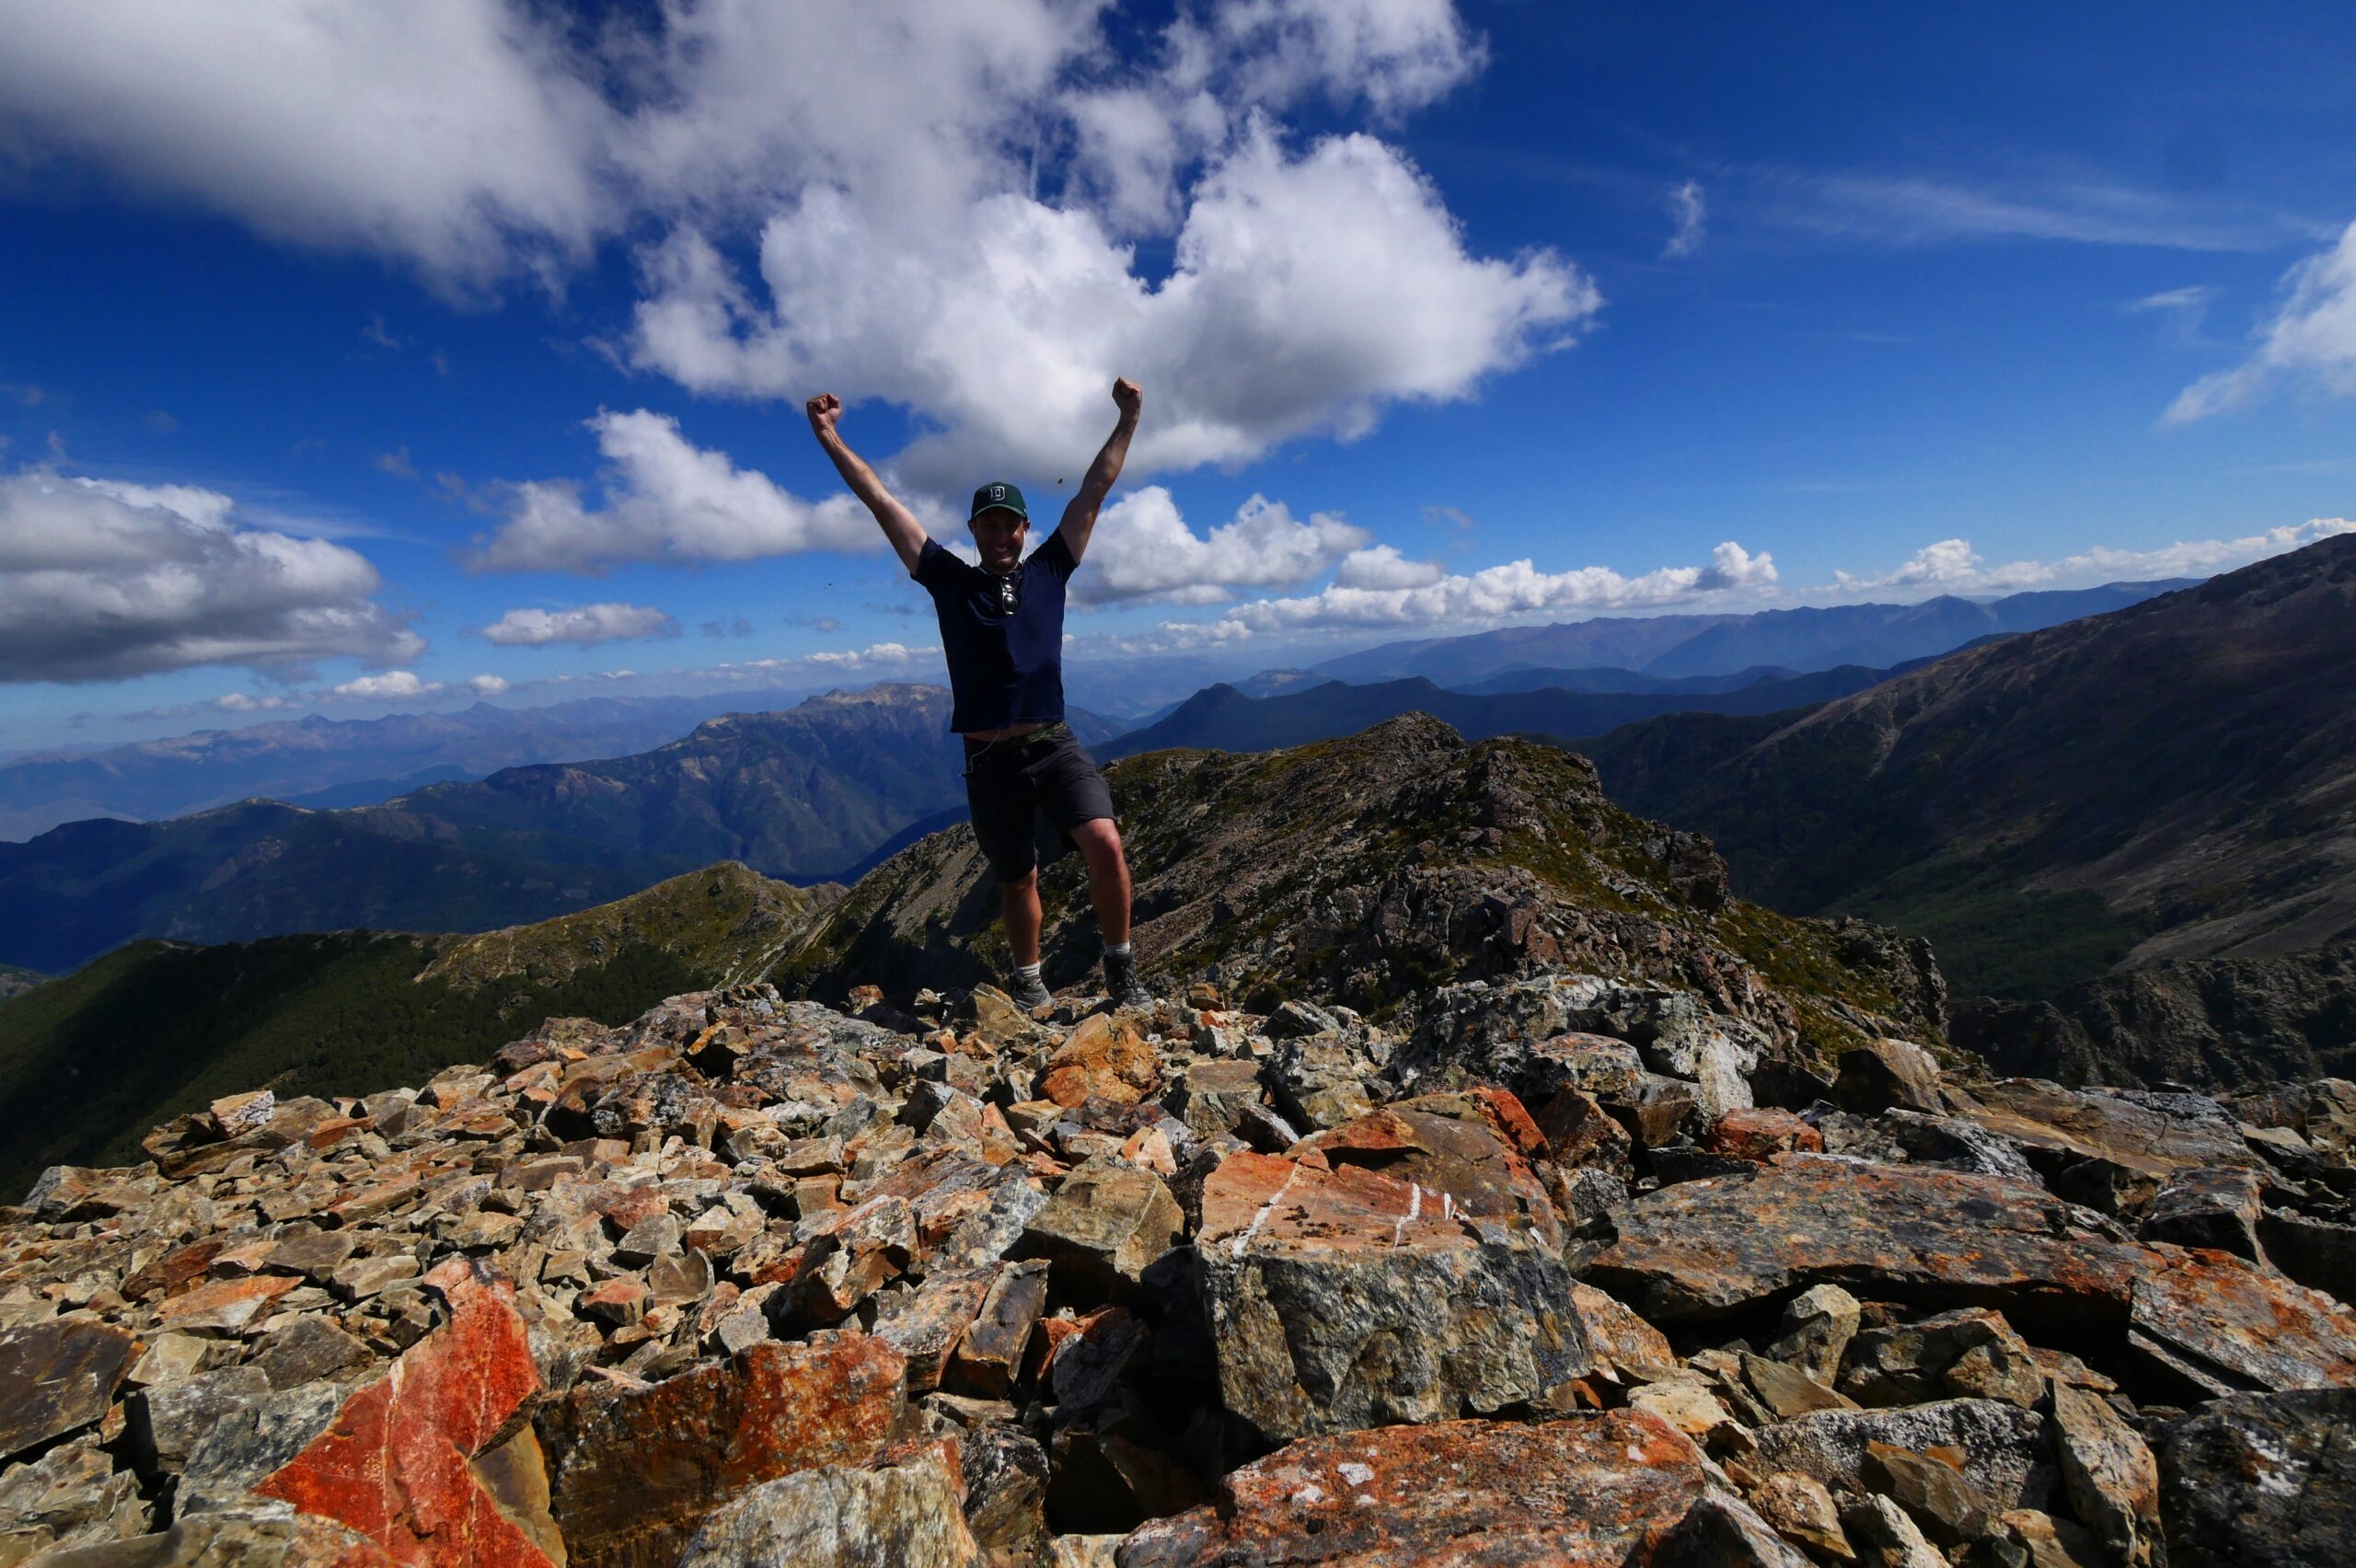 Hank celebrates his arrival atop Mount Rintoul in New Zealand's Richmond Range.